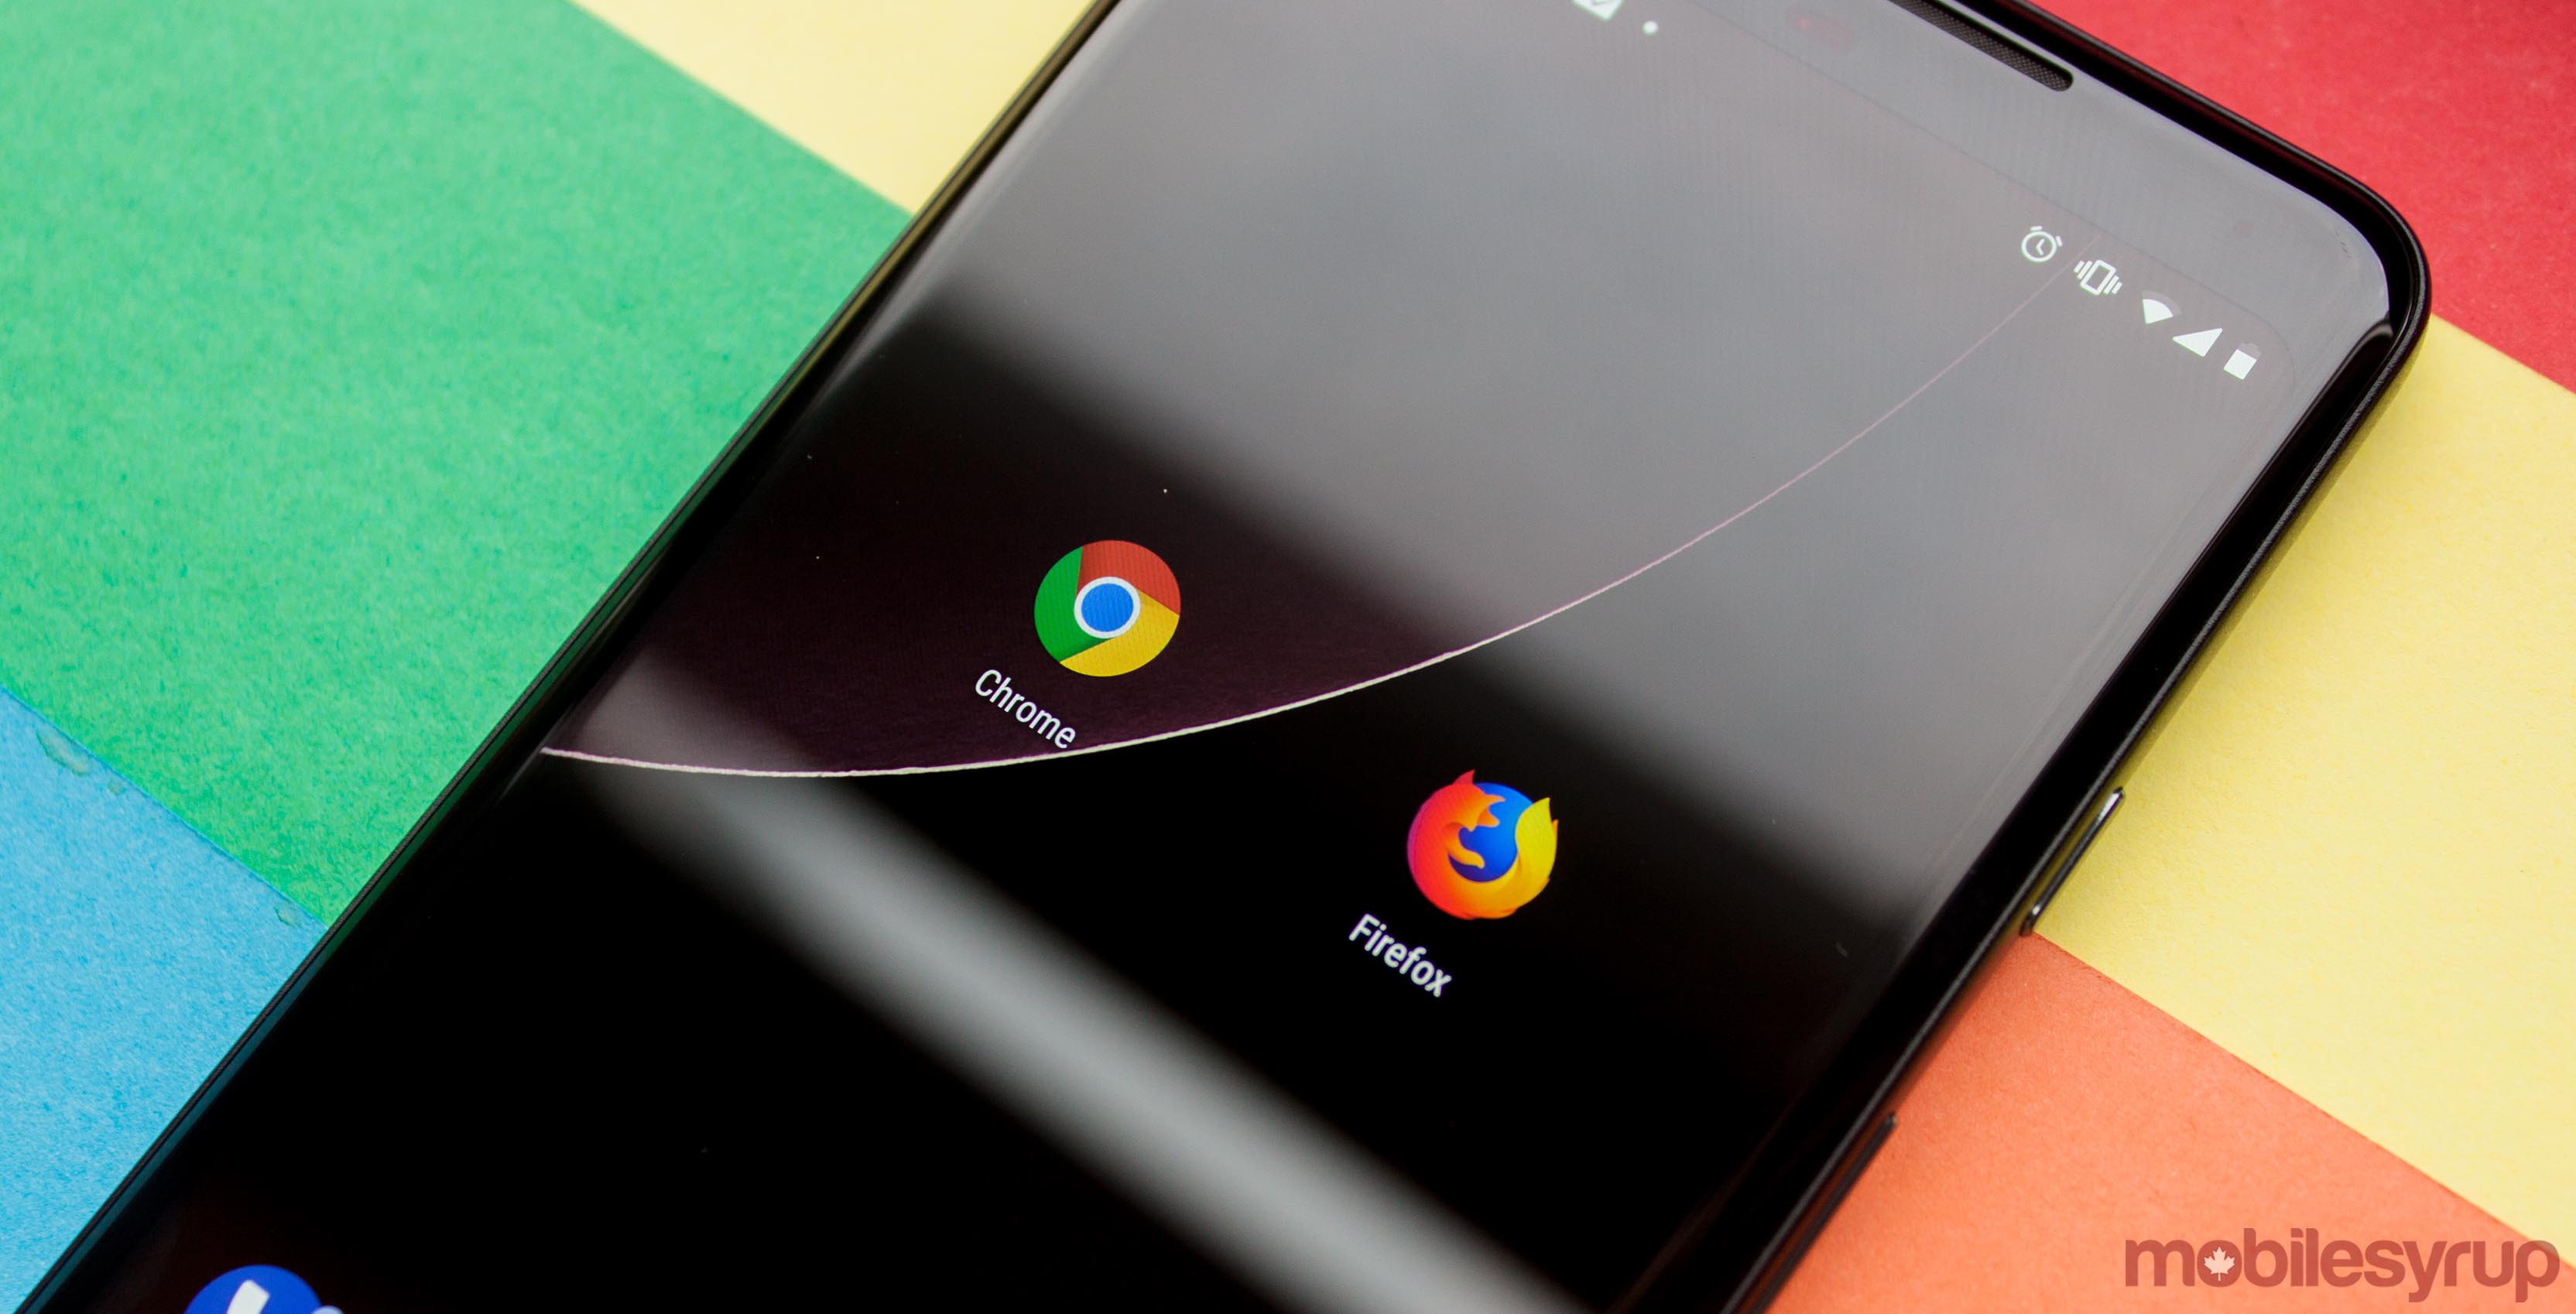 Google Chrome and Firefox app icons